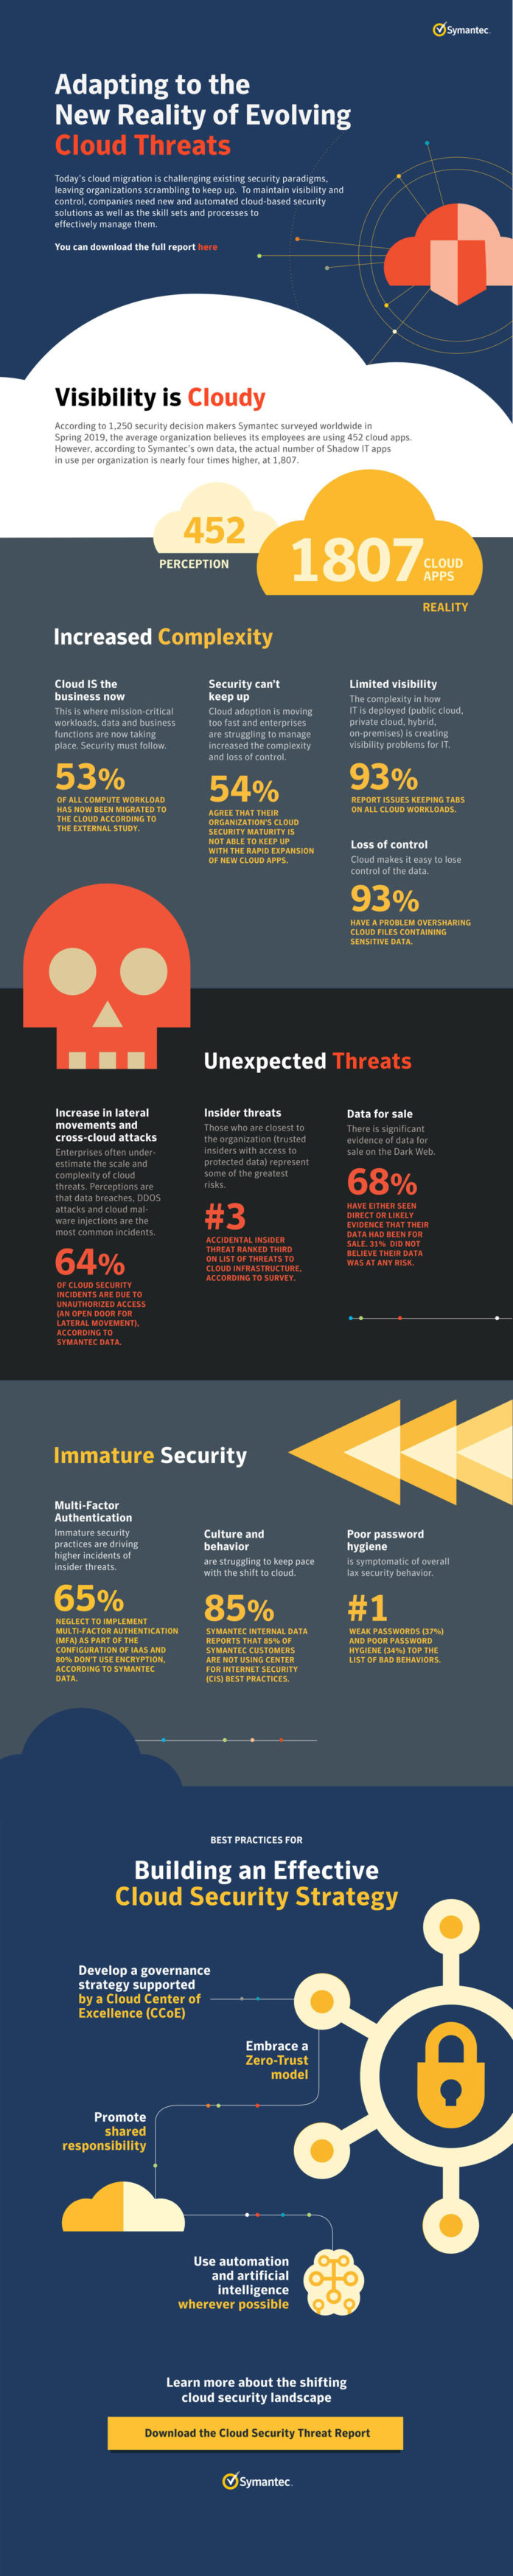 Symantec’s Cloud Security Threat Report